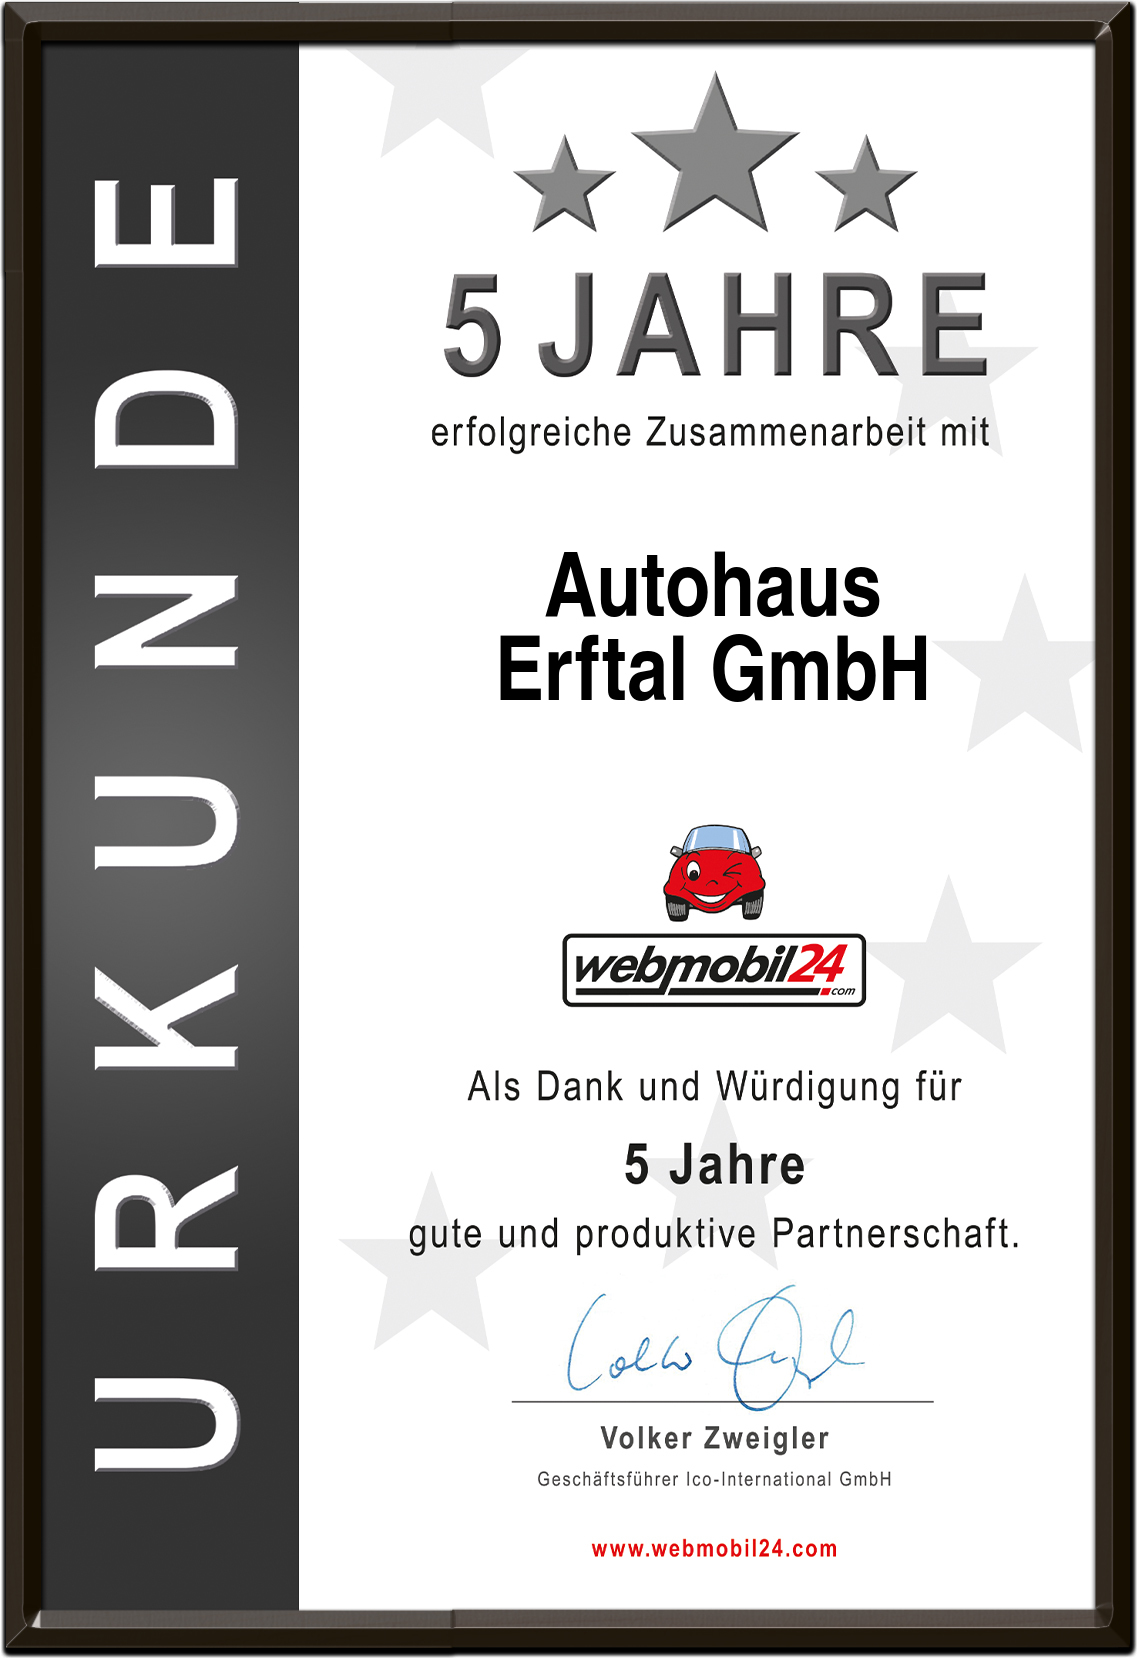 Autohaus
Erftal GmbH